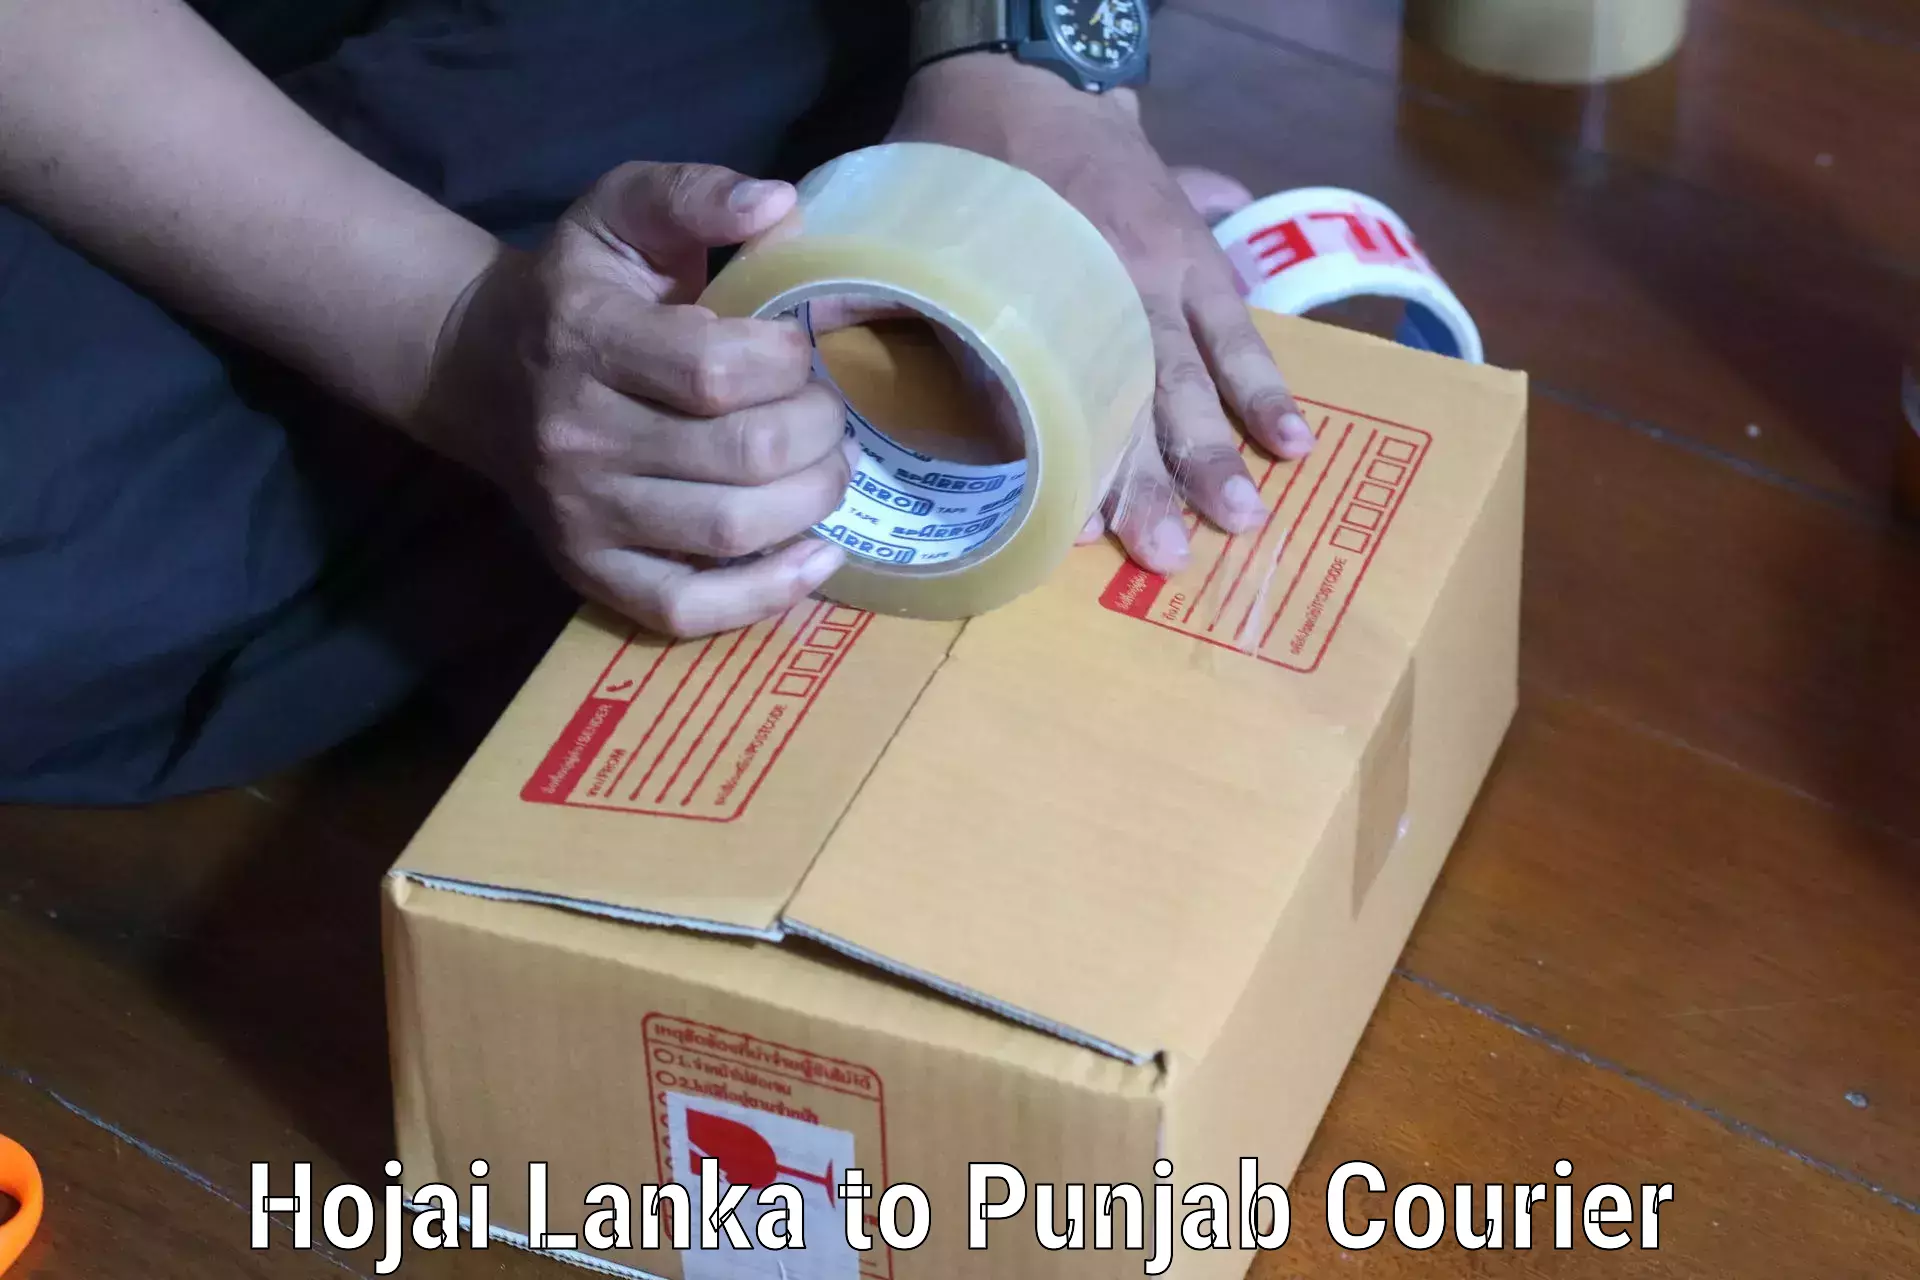 Digital courier platforms Hojai Lanka to Dhilwan